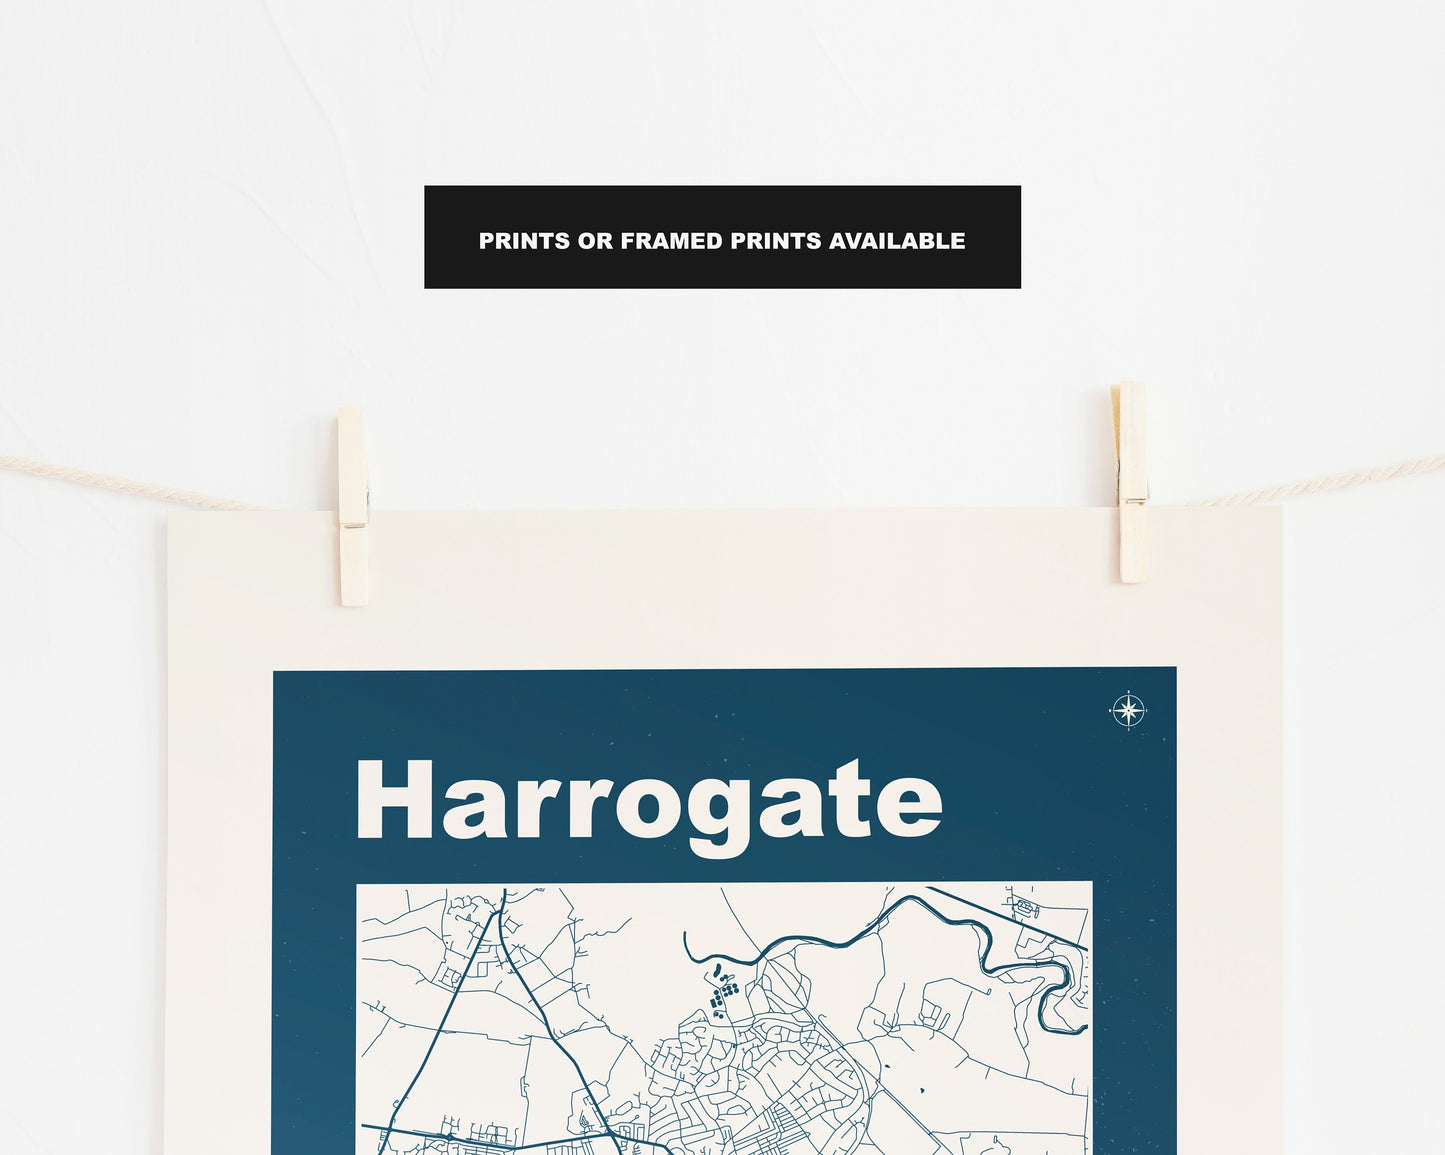 Harrogate Print - Map Print - Mid Century Modern  - Retro - Vintage - Contemporary - Harrogate Print - Map - Map Poster - Gift - Yorkshire